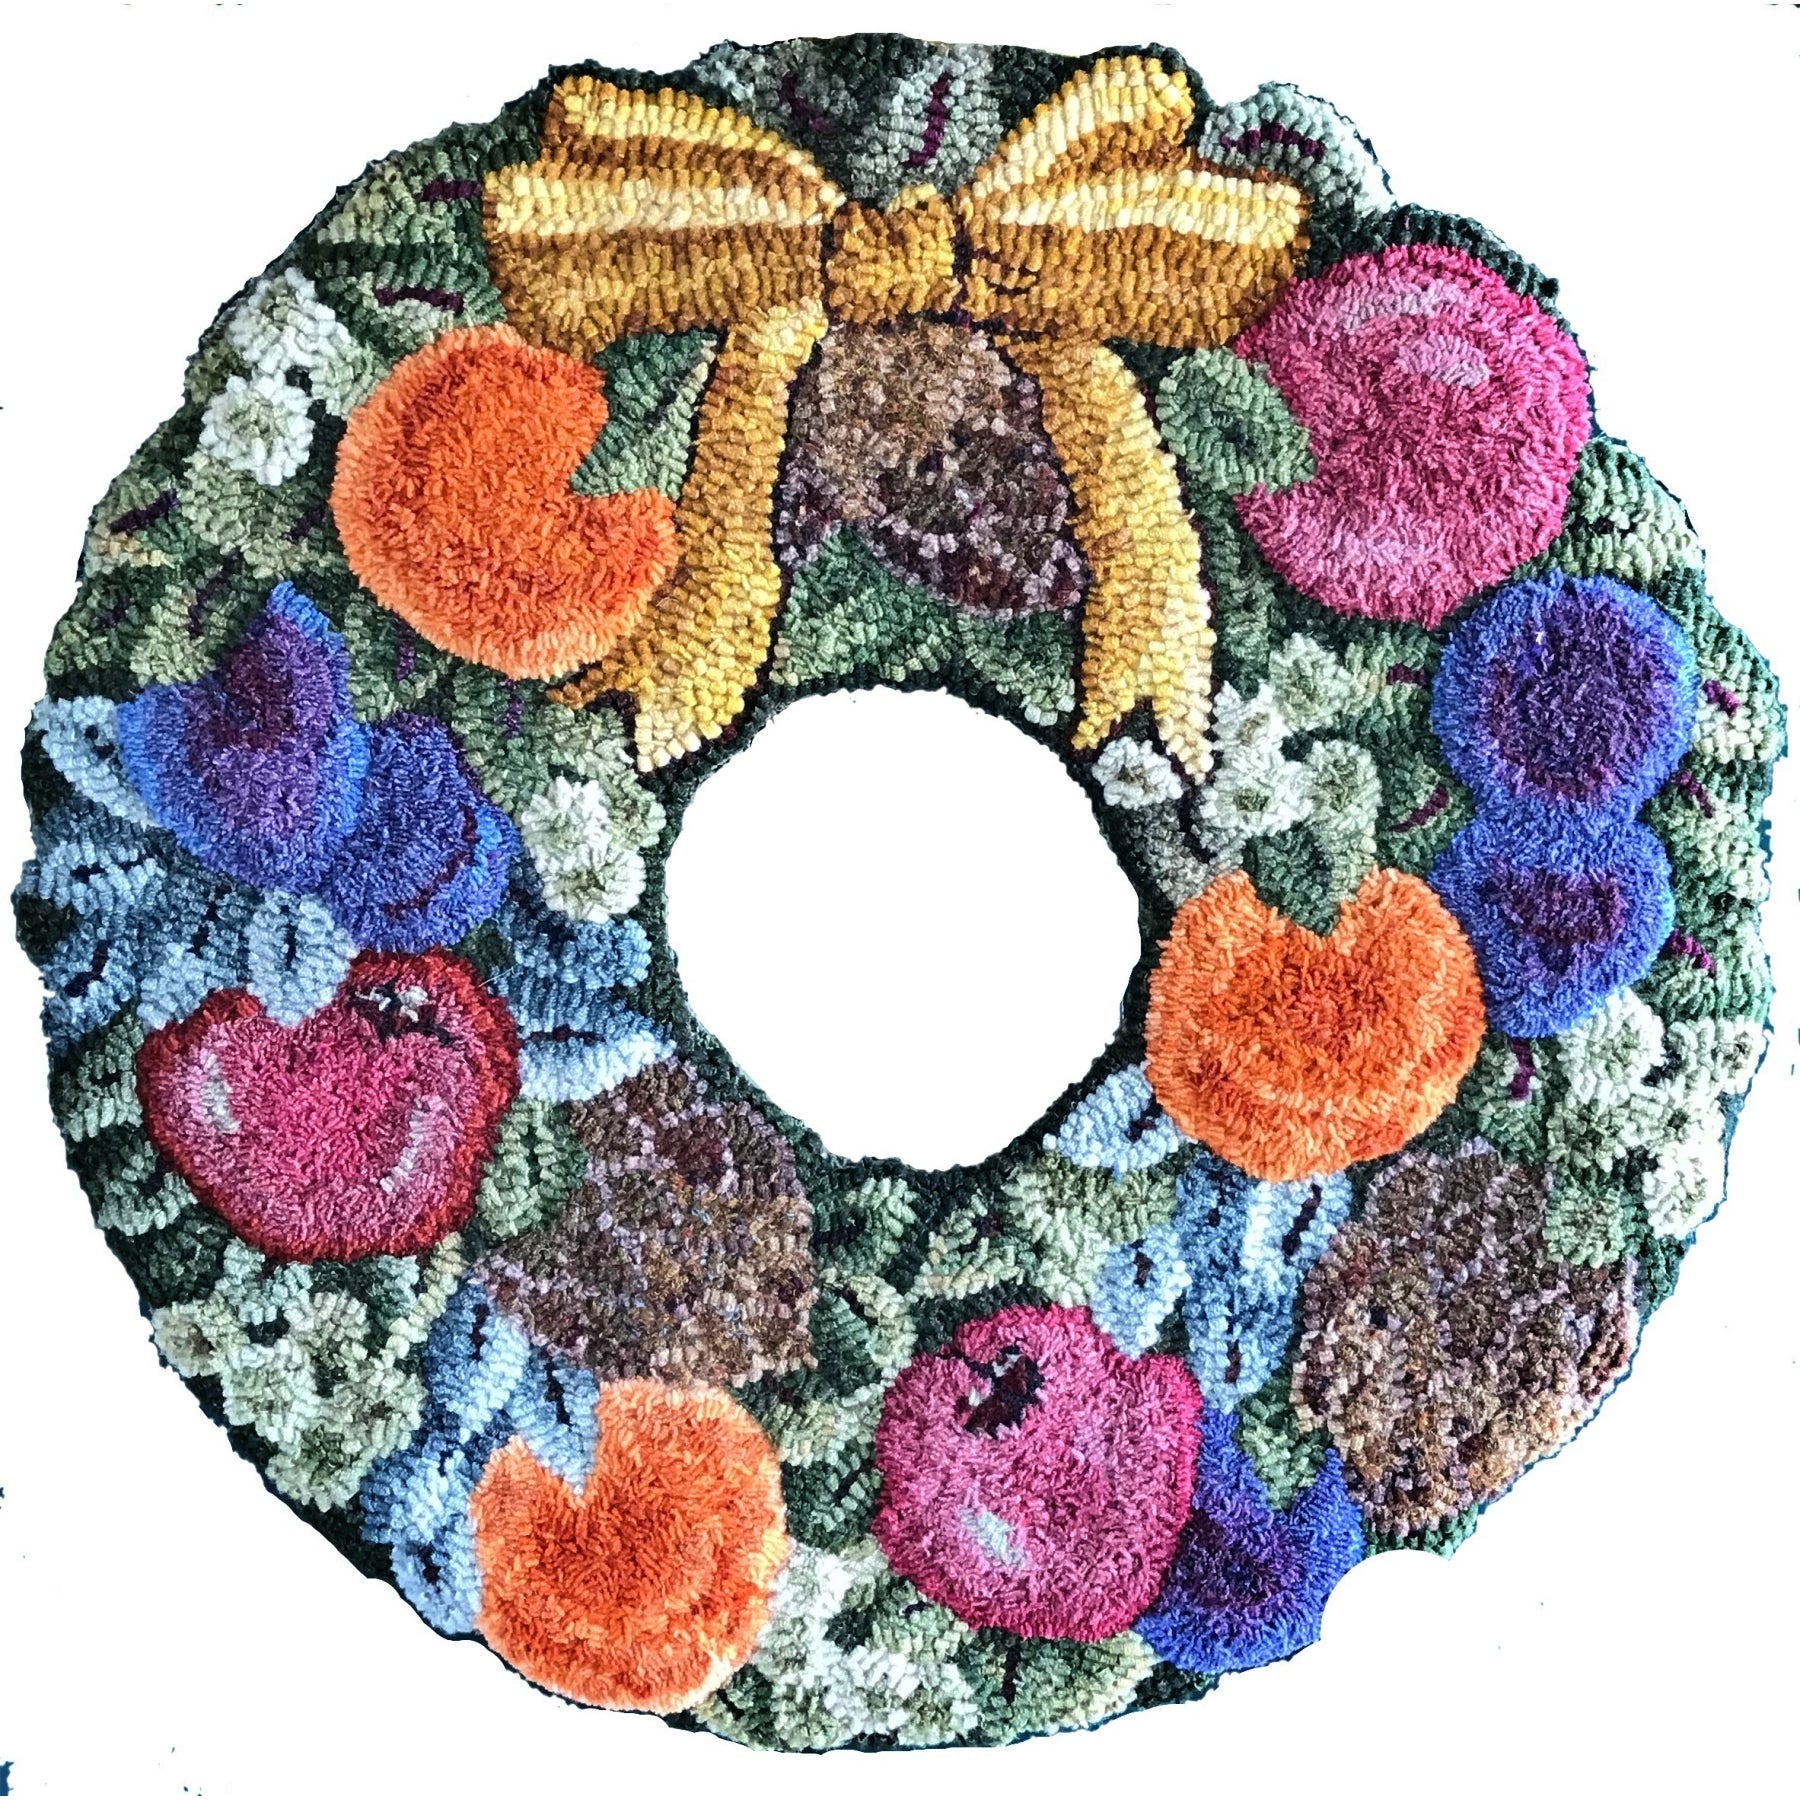 Della Robbia, rug hooked by Betsy Engel